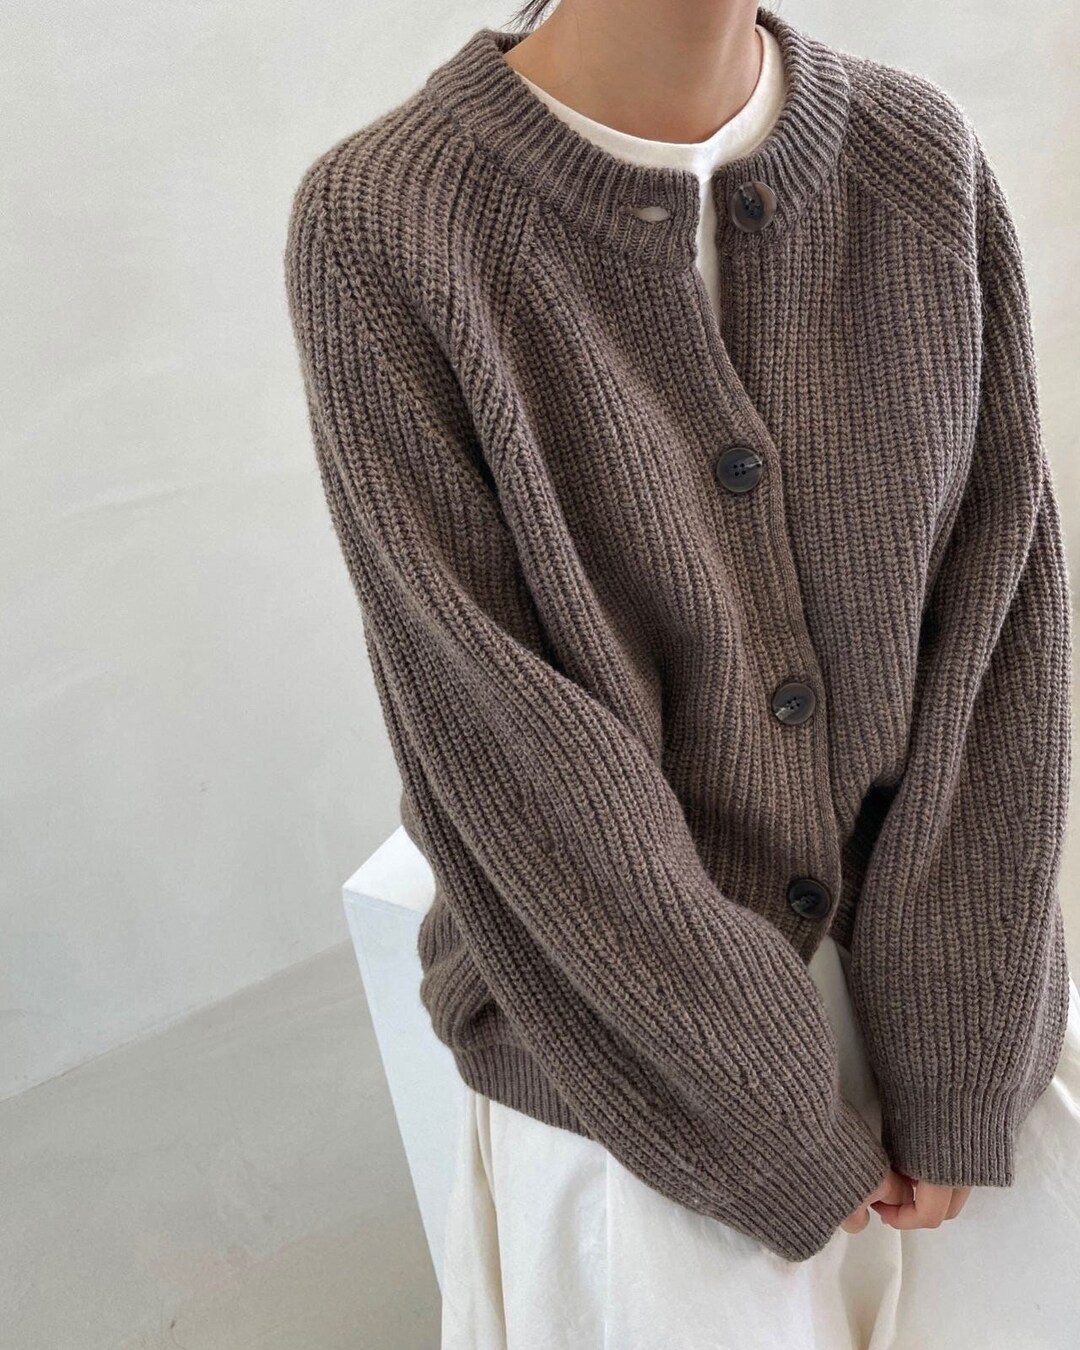 Cardigan for Women / Sweater for Women / Wool Knit Cardigan / - Etsy